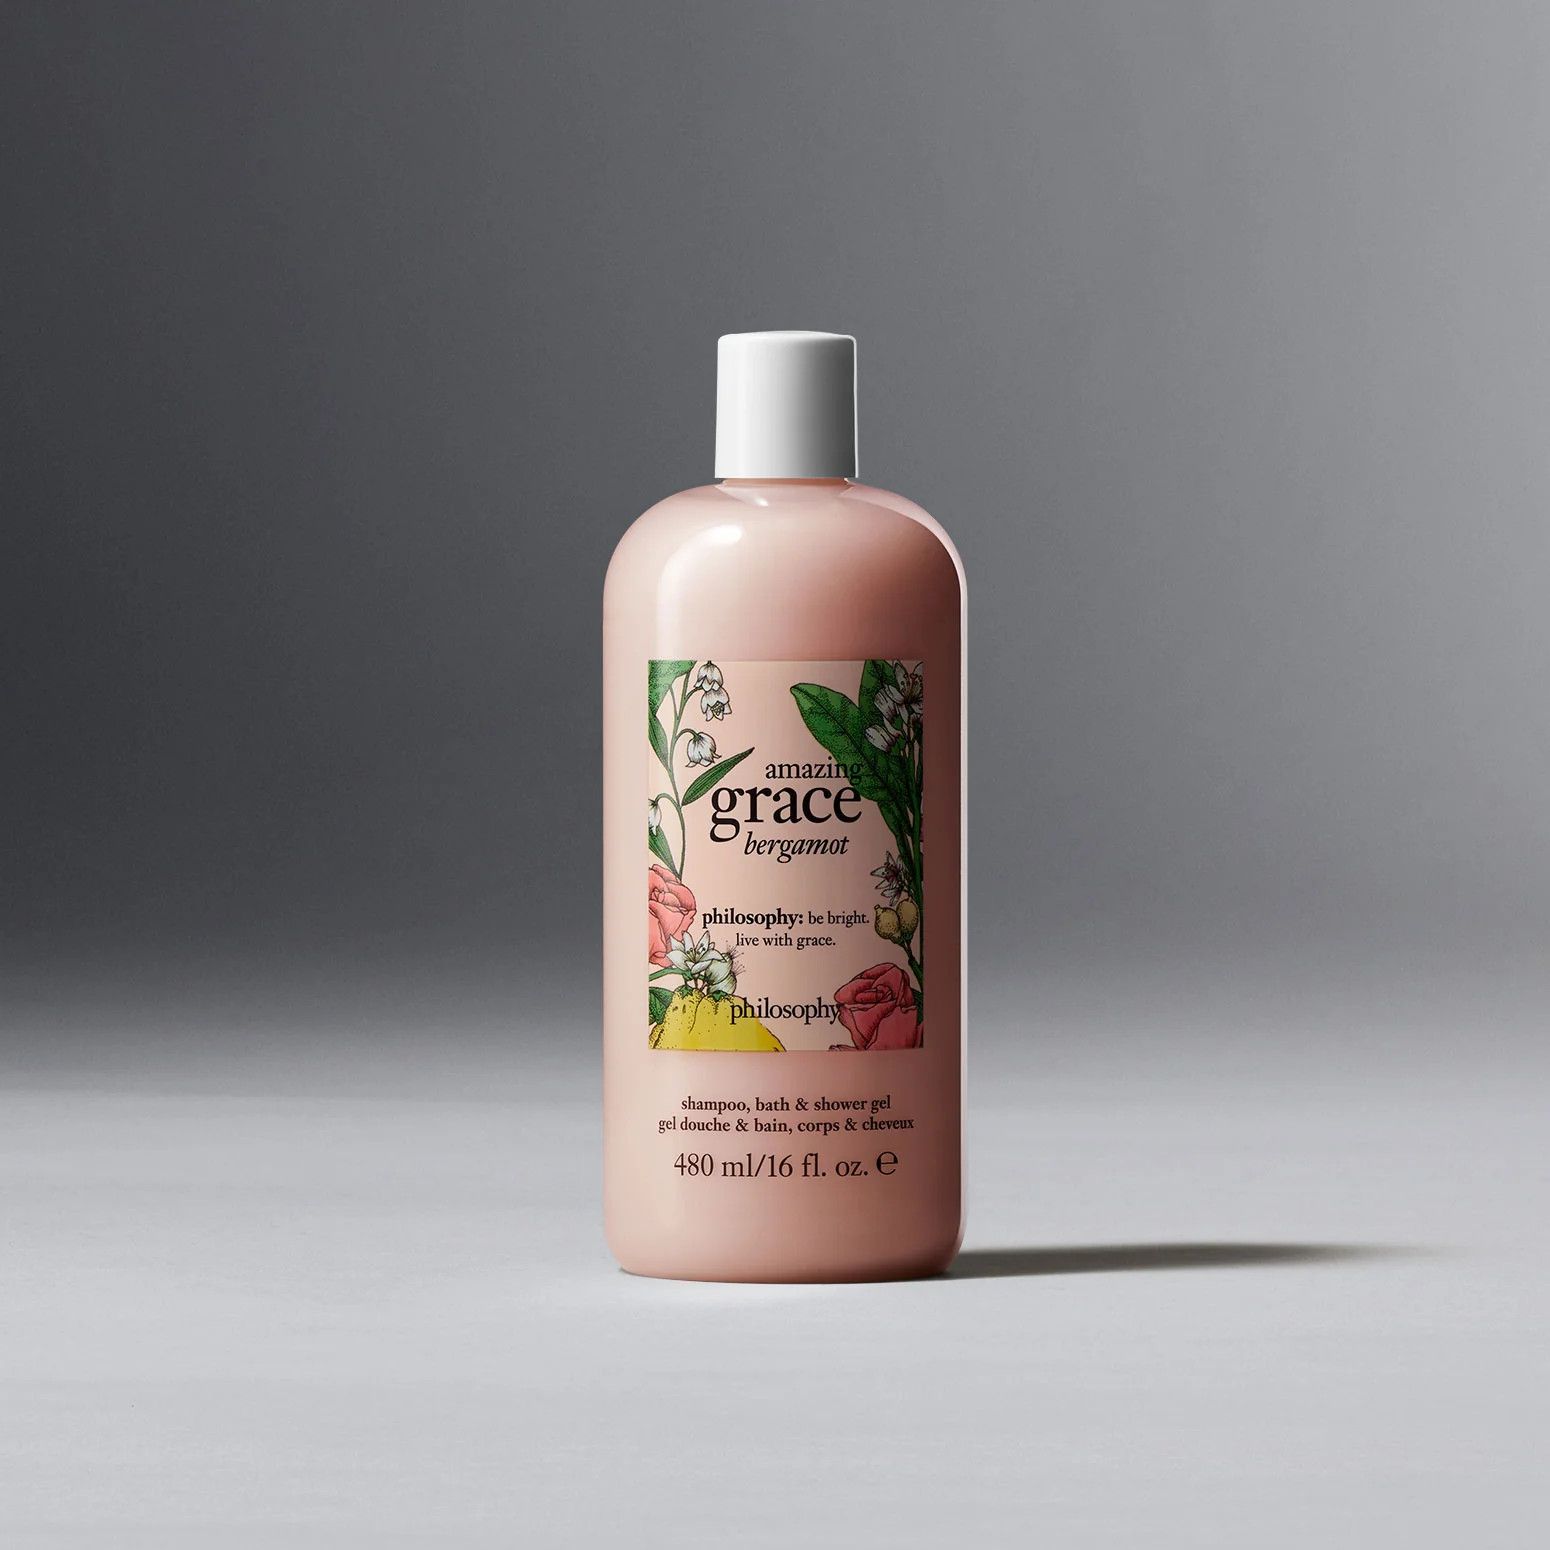 bergamot shampoo, bath & shower gel | Philosophy